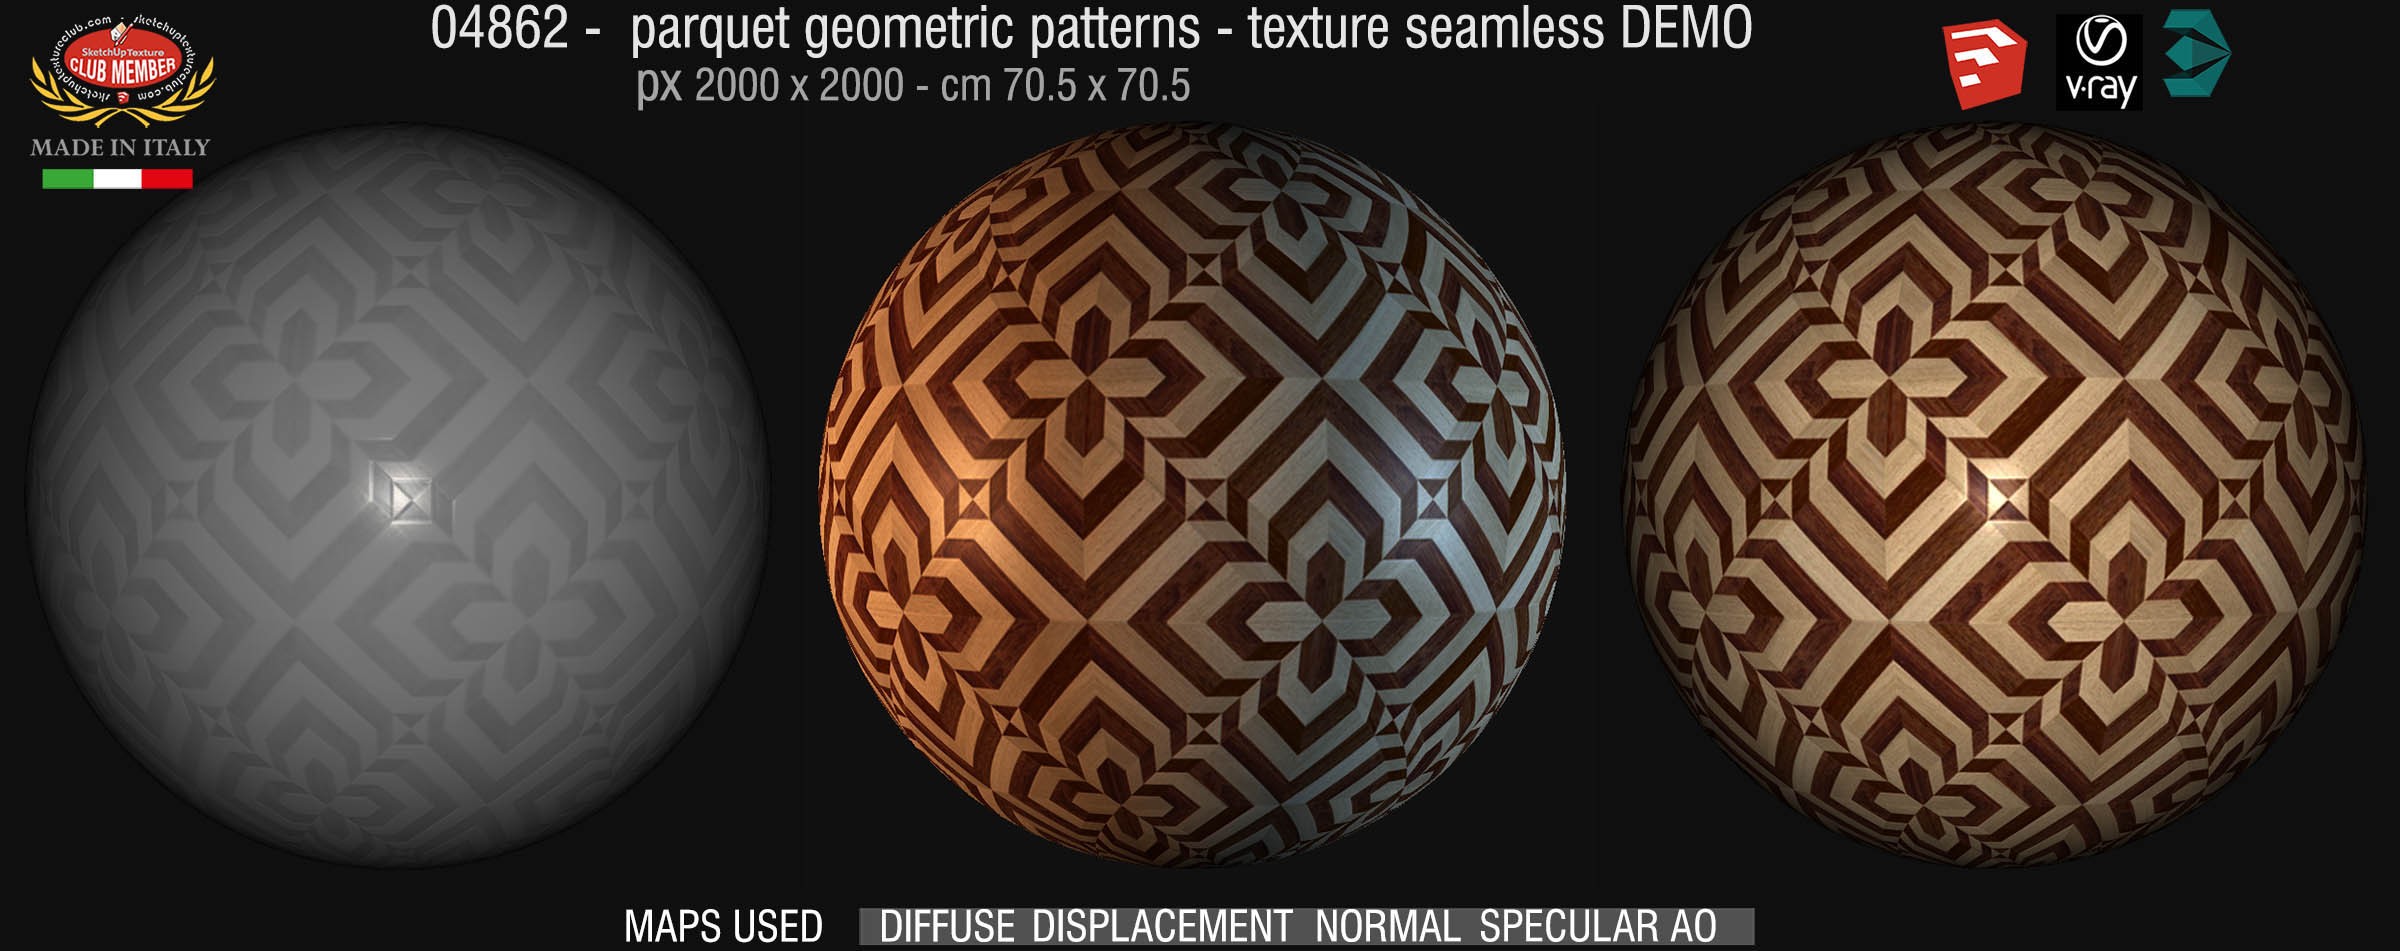 04862 Parquet geometric pattern texture seamless + maps DEMO